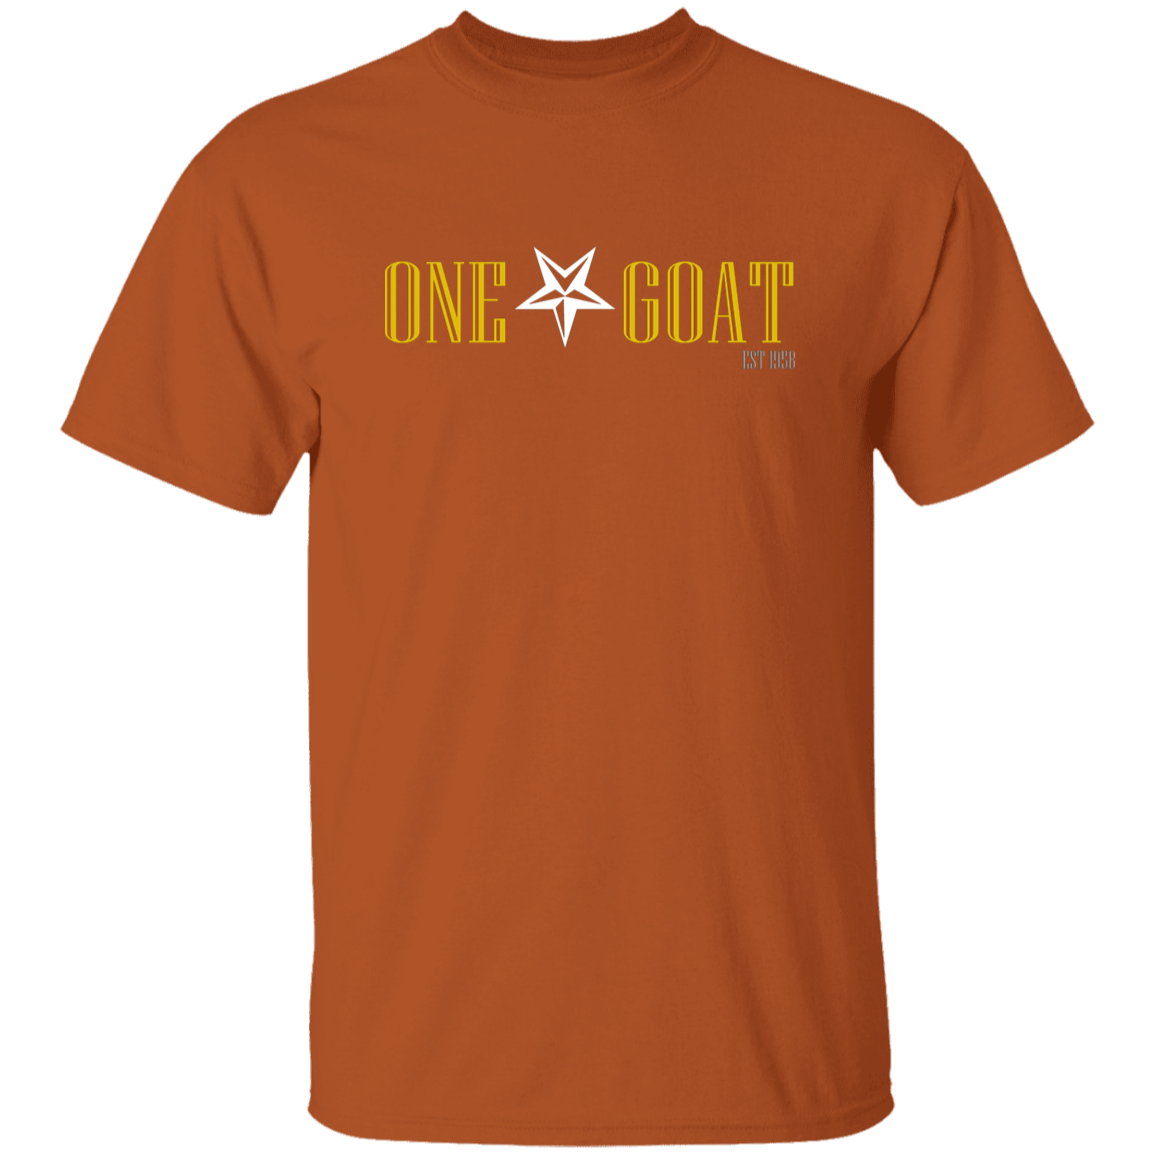 One Star Goat Gold 5.3 oz. T-Shirt